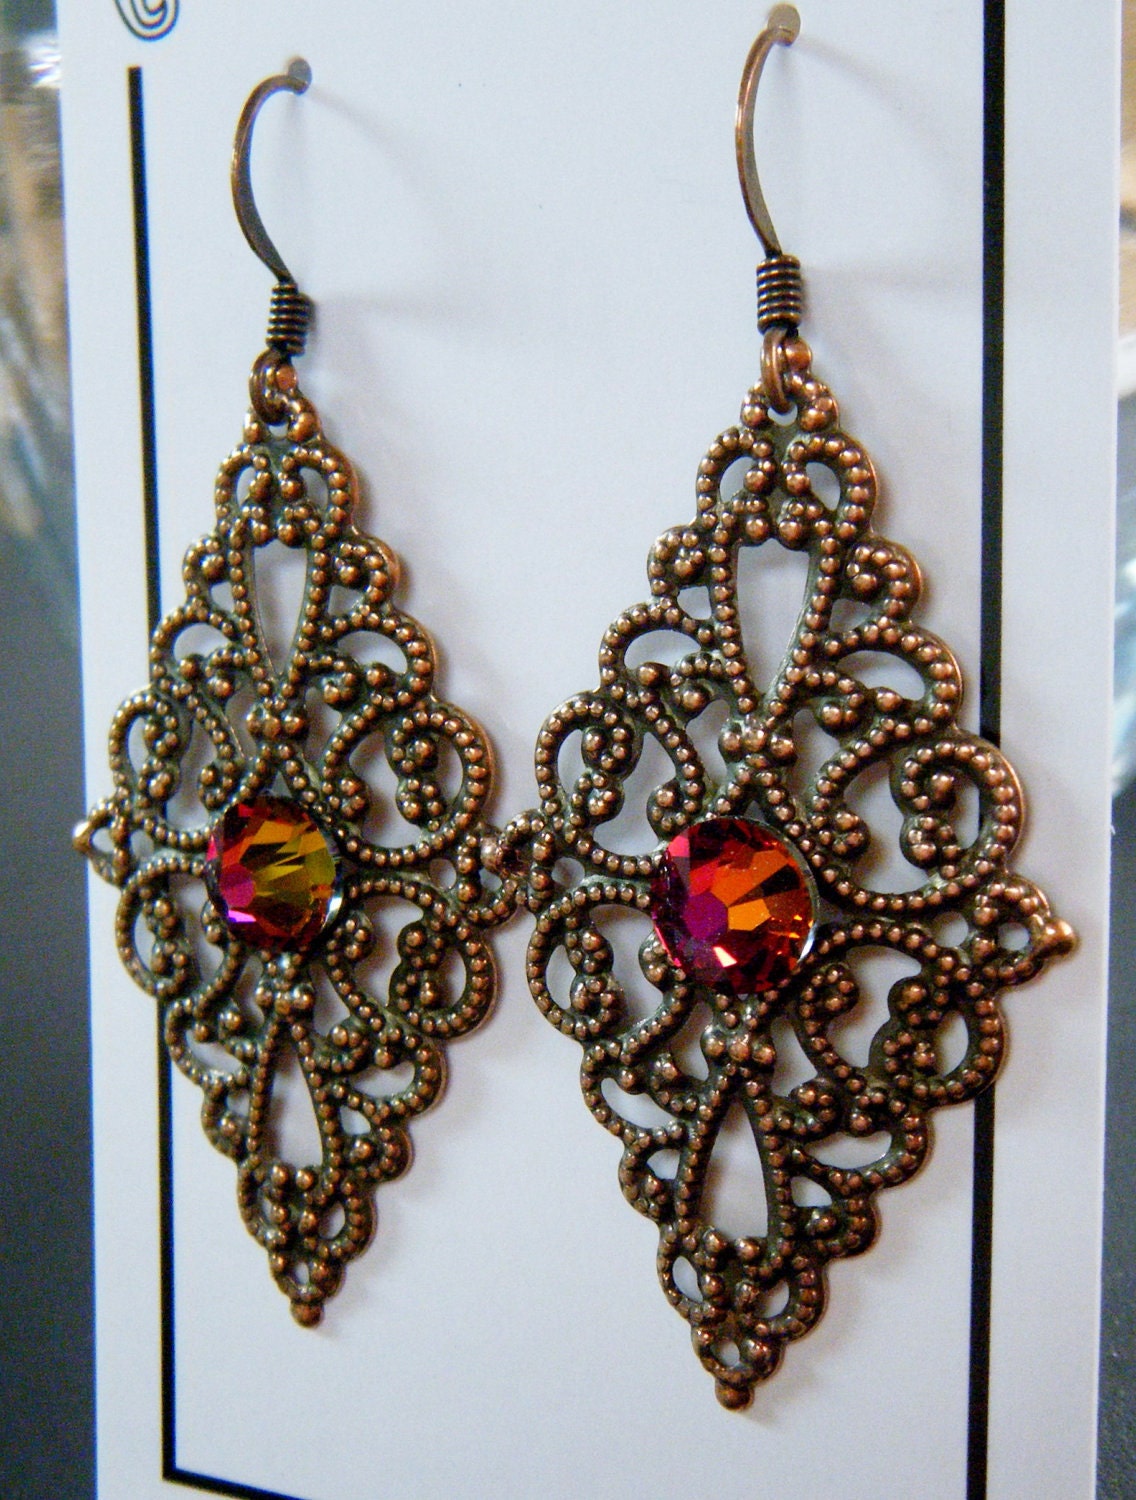 Swarovski Crystal Filigree Earrings in Antiqued Copper E4 200 12 Diam - SimplyClassicJewelry